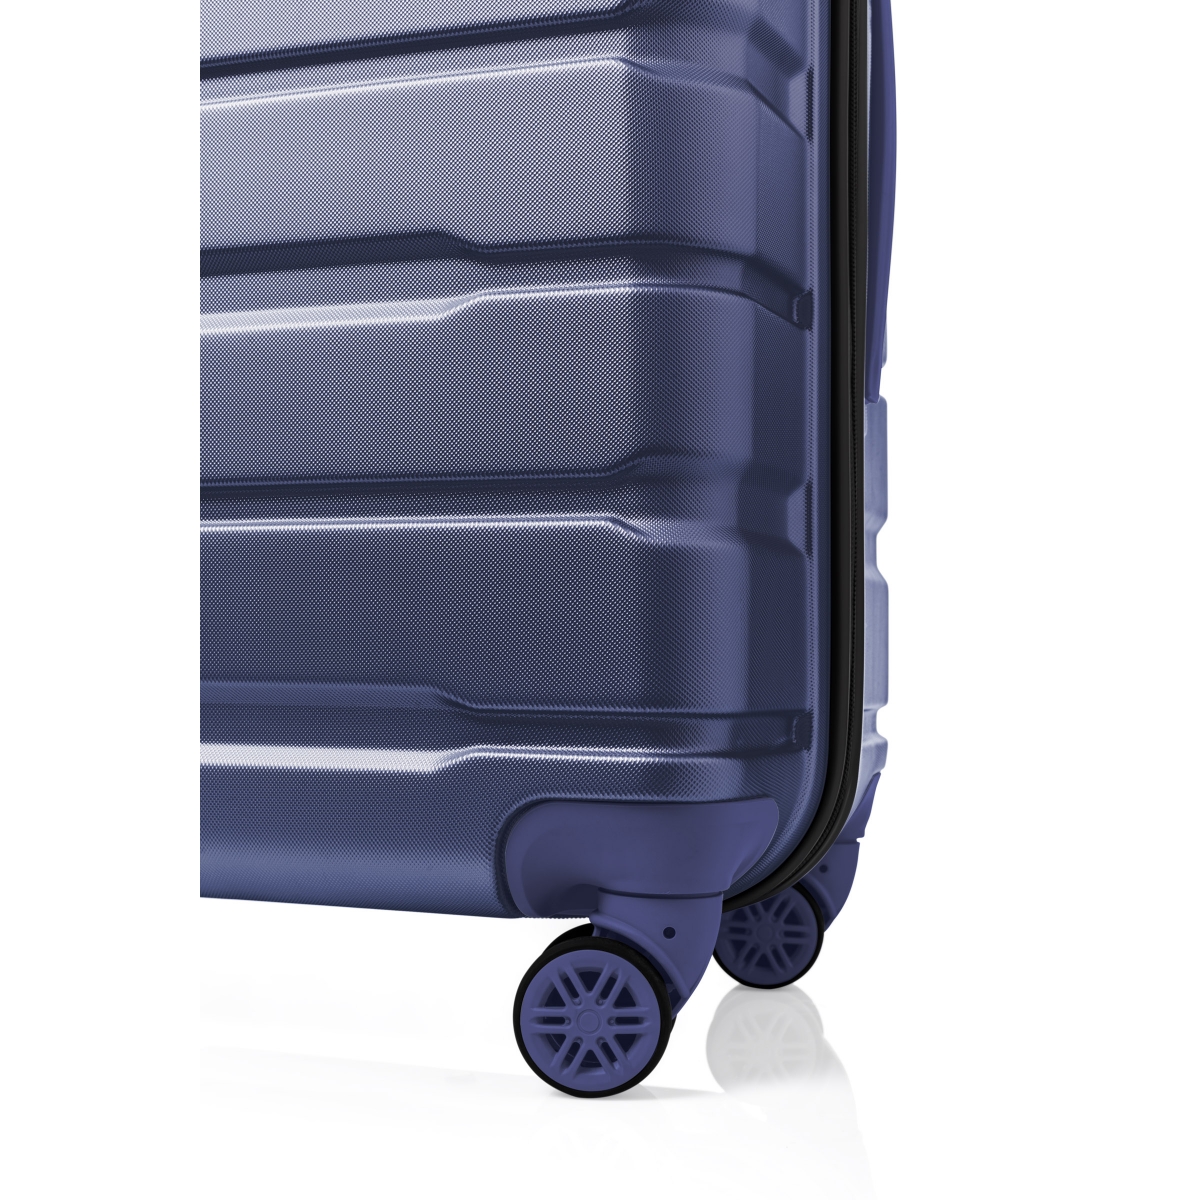 Gedox Abs Premium Tonaton 3'lü Valiz Seyahat Seti - Model:500.05 Çivit Mavi